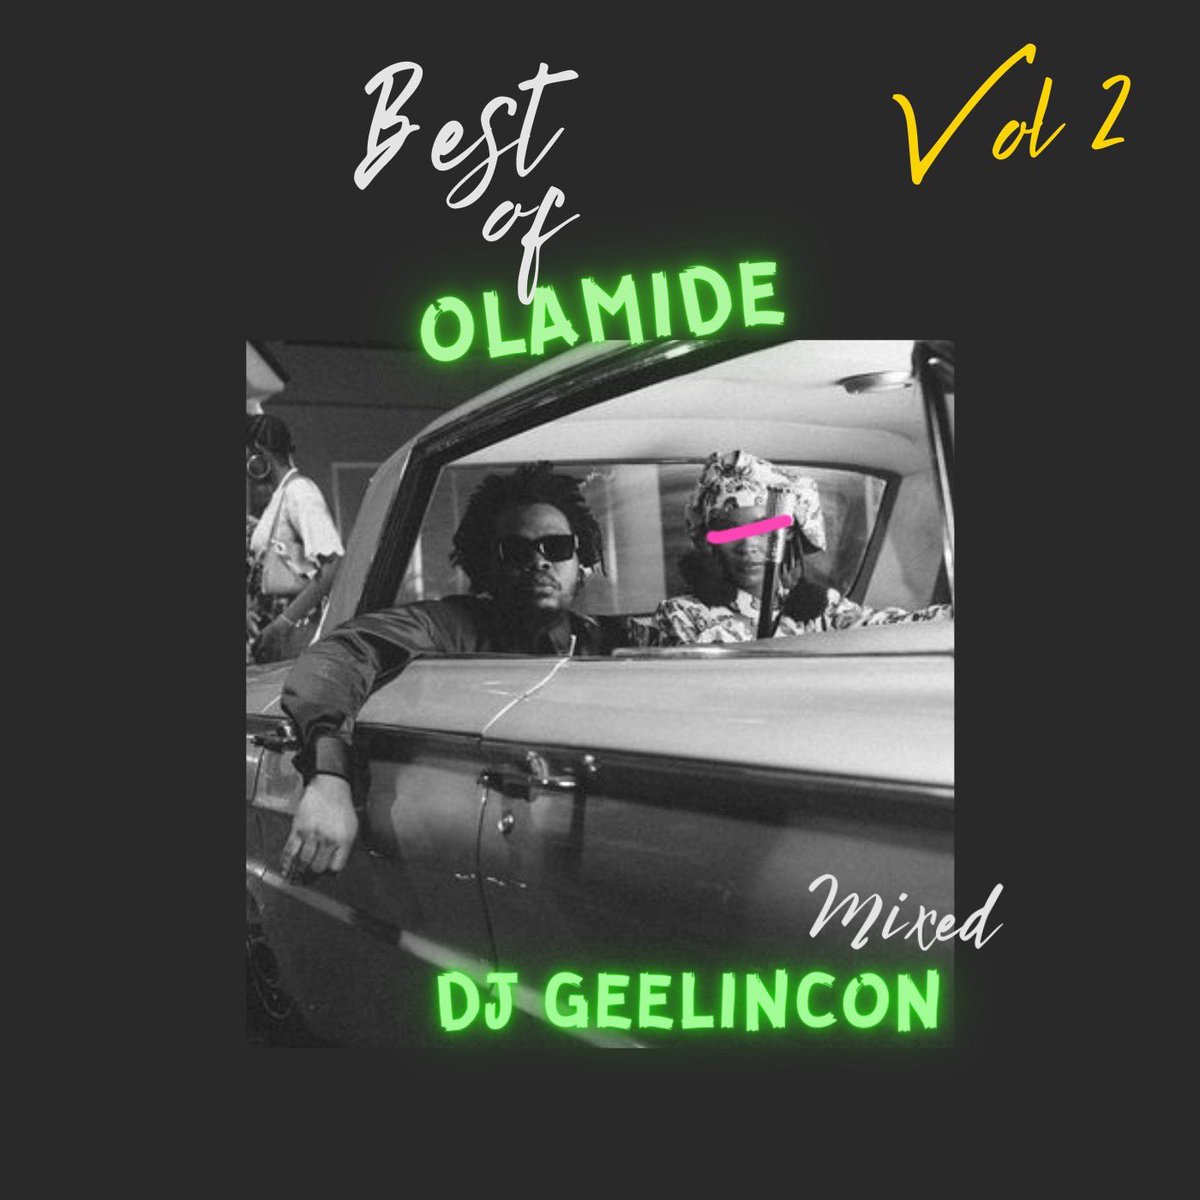 DJ GEELINCON - BEST OF OLAMIDE VOL 2 youtu.be/GmlxhODrOCE via @YouTube